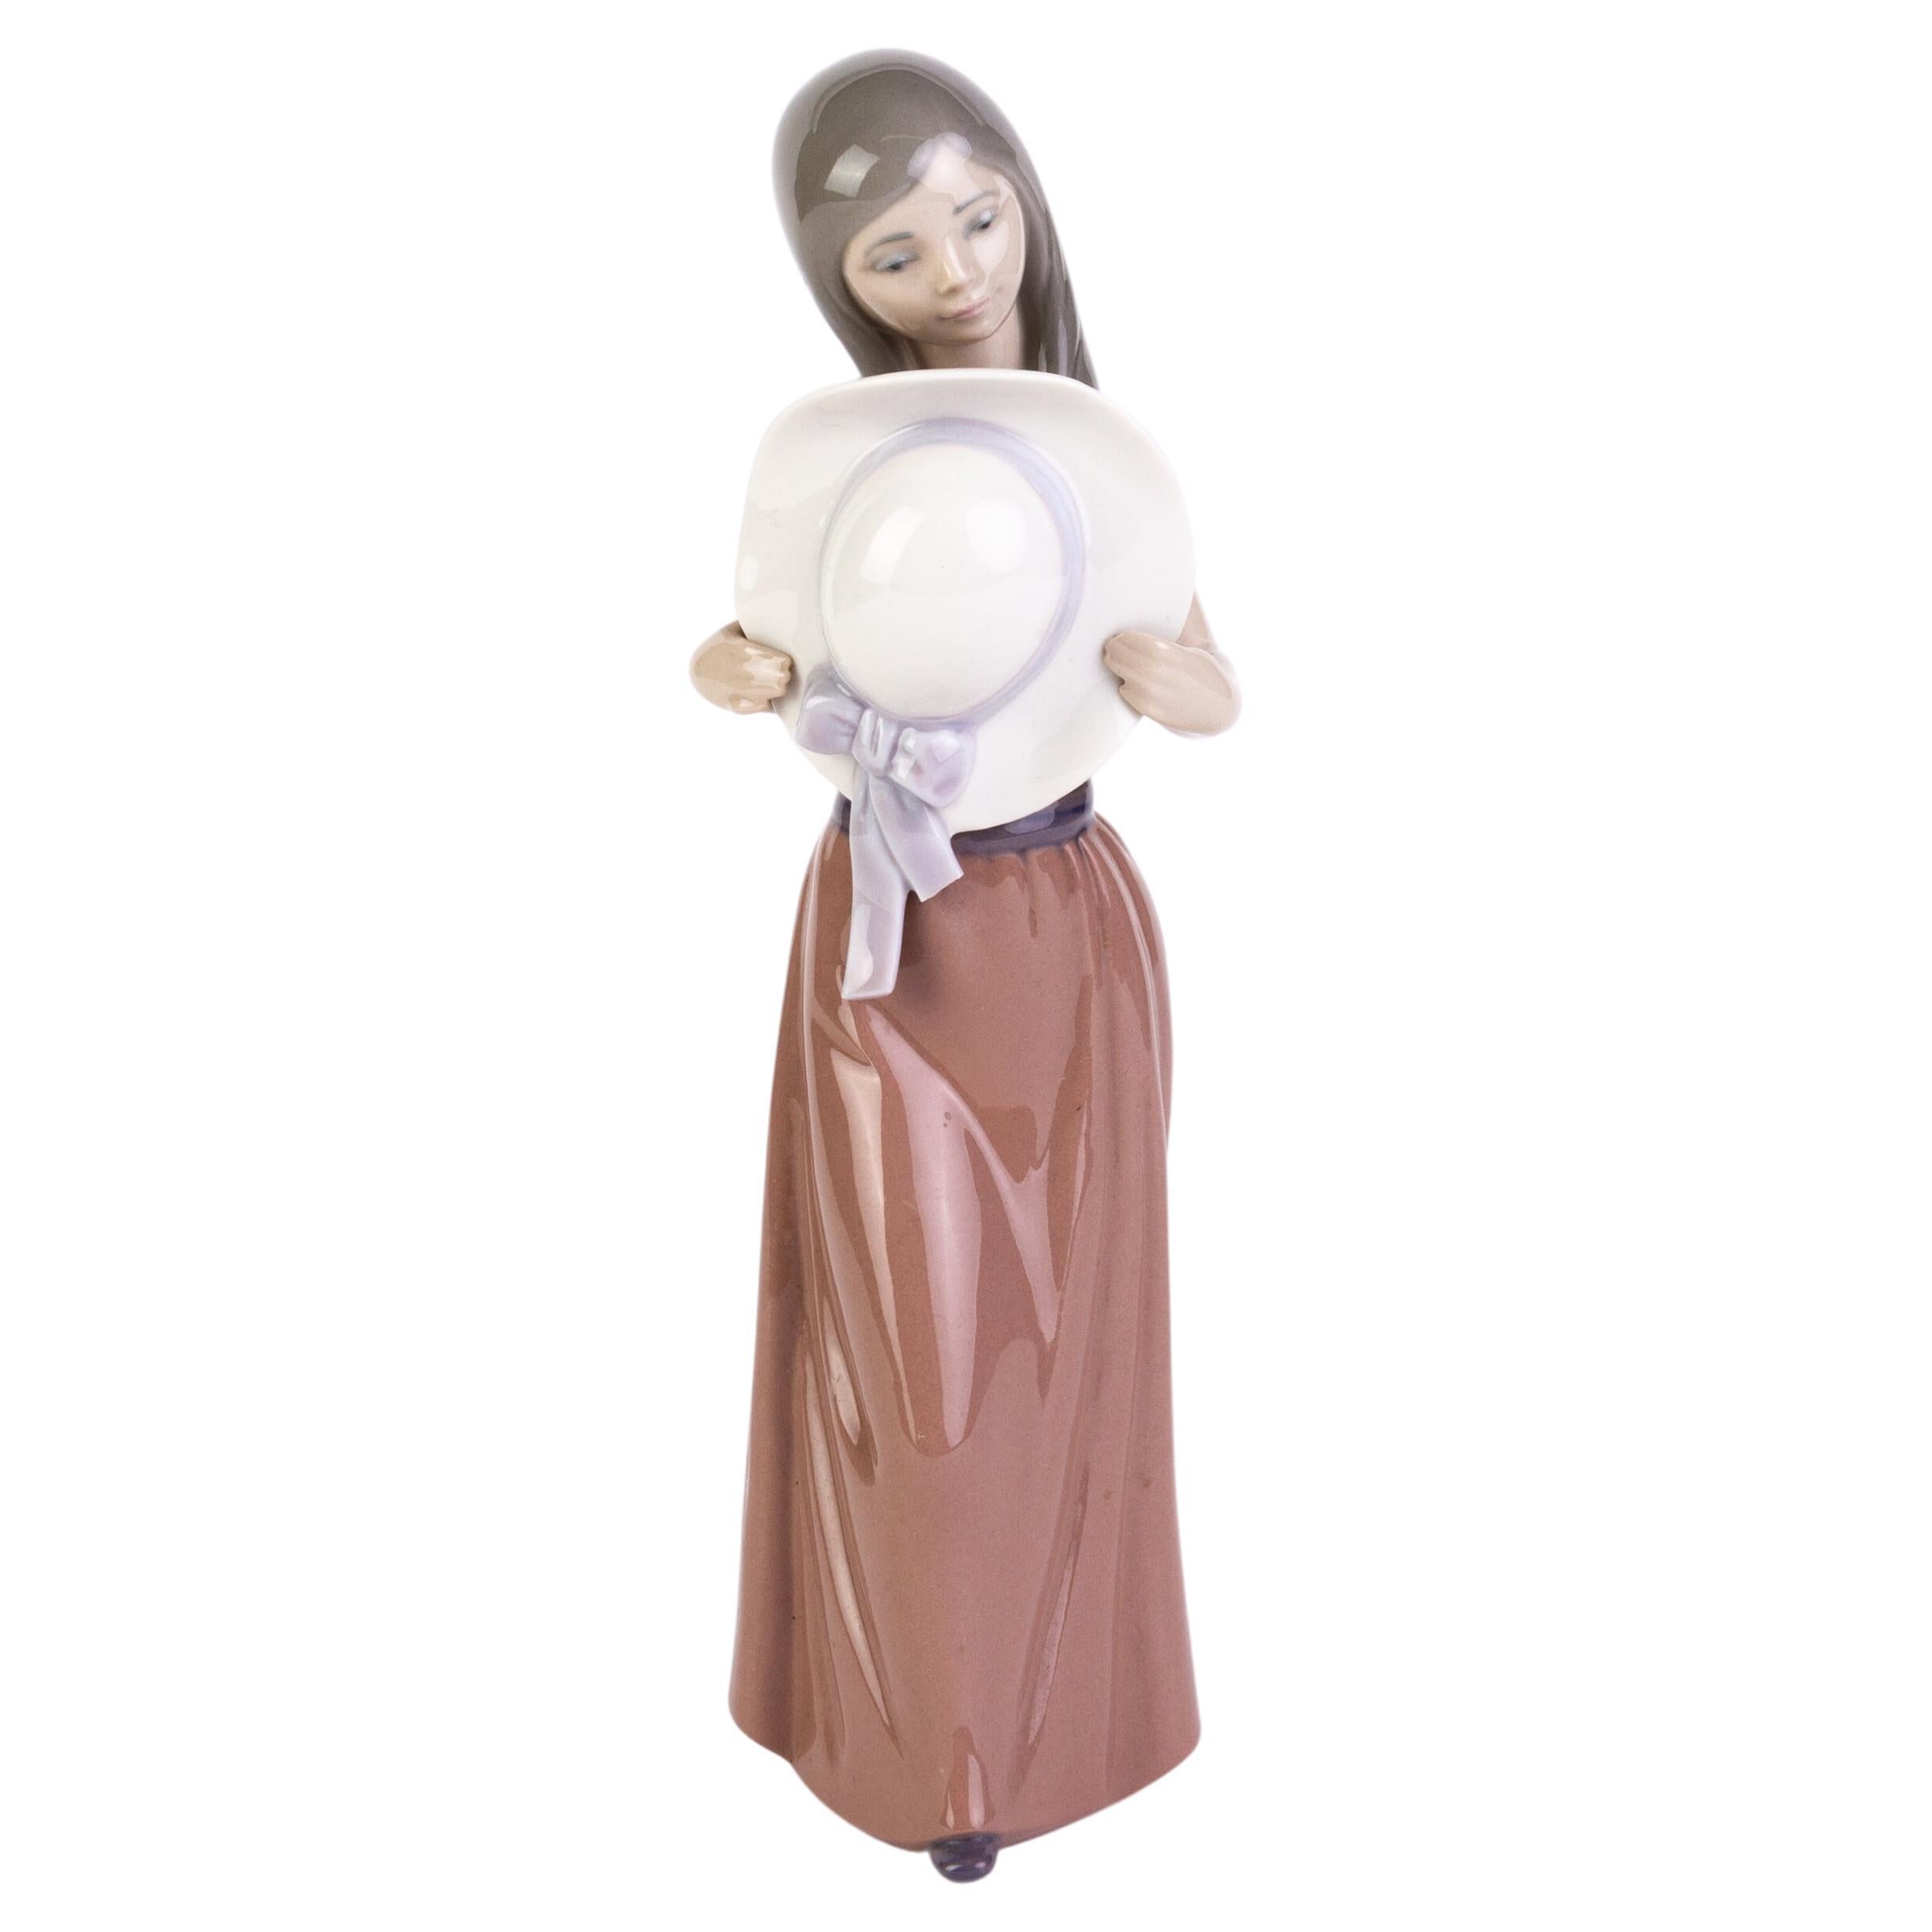 Retired Lladro Fine Porcelain Sculpture Figure "Bashful Girl with Hat" 5007 For Sale